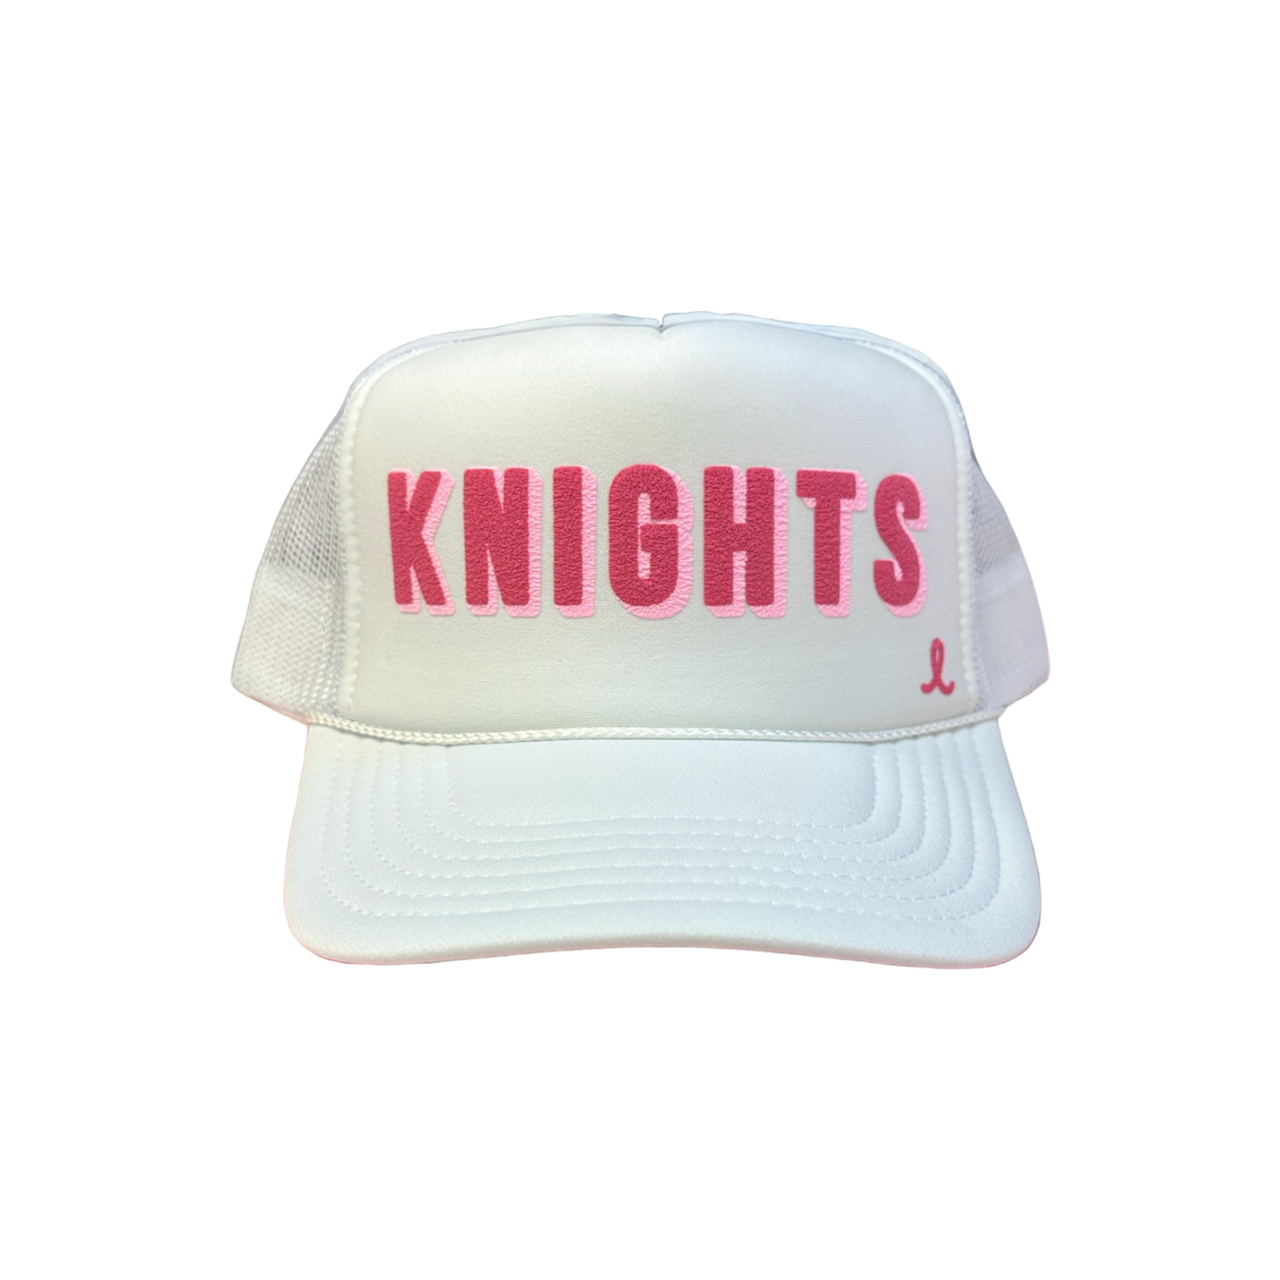 Knights (PINK) - Puffy White Trucker